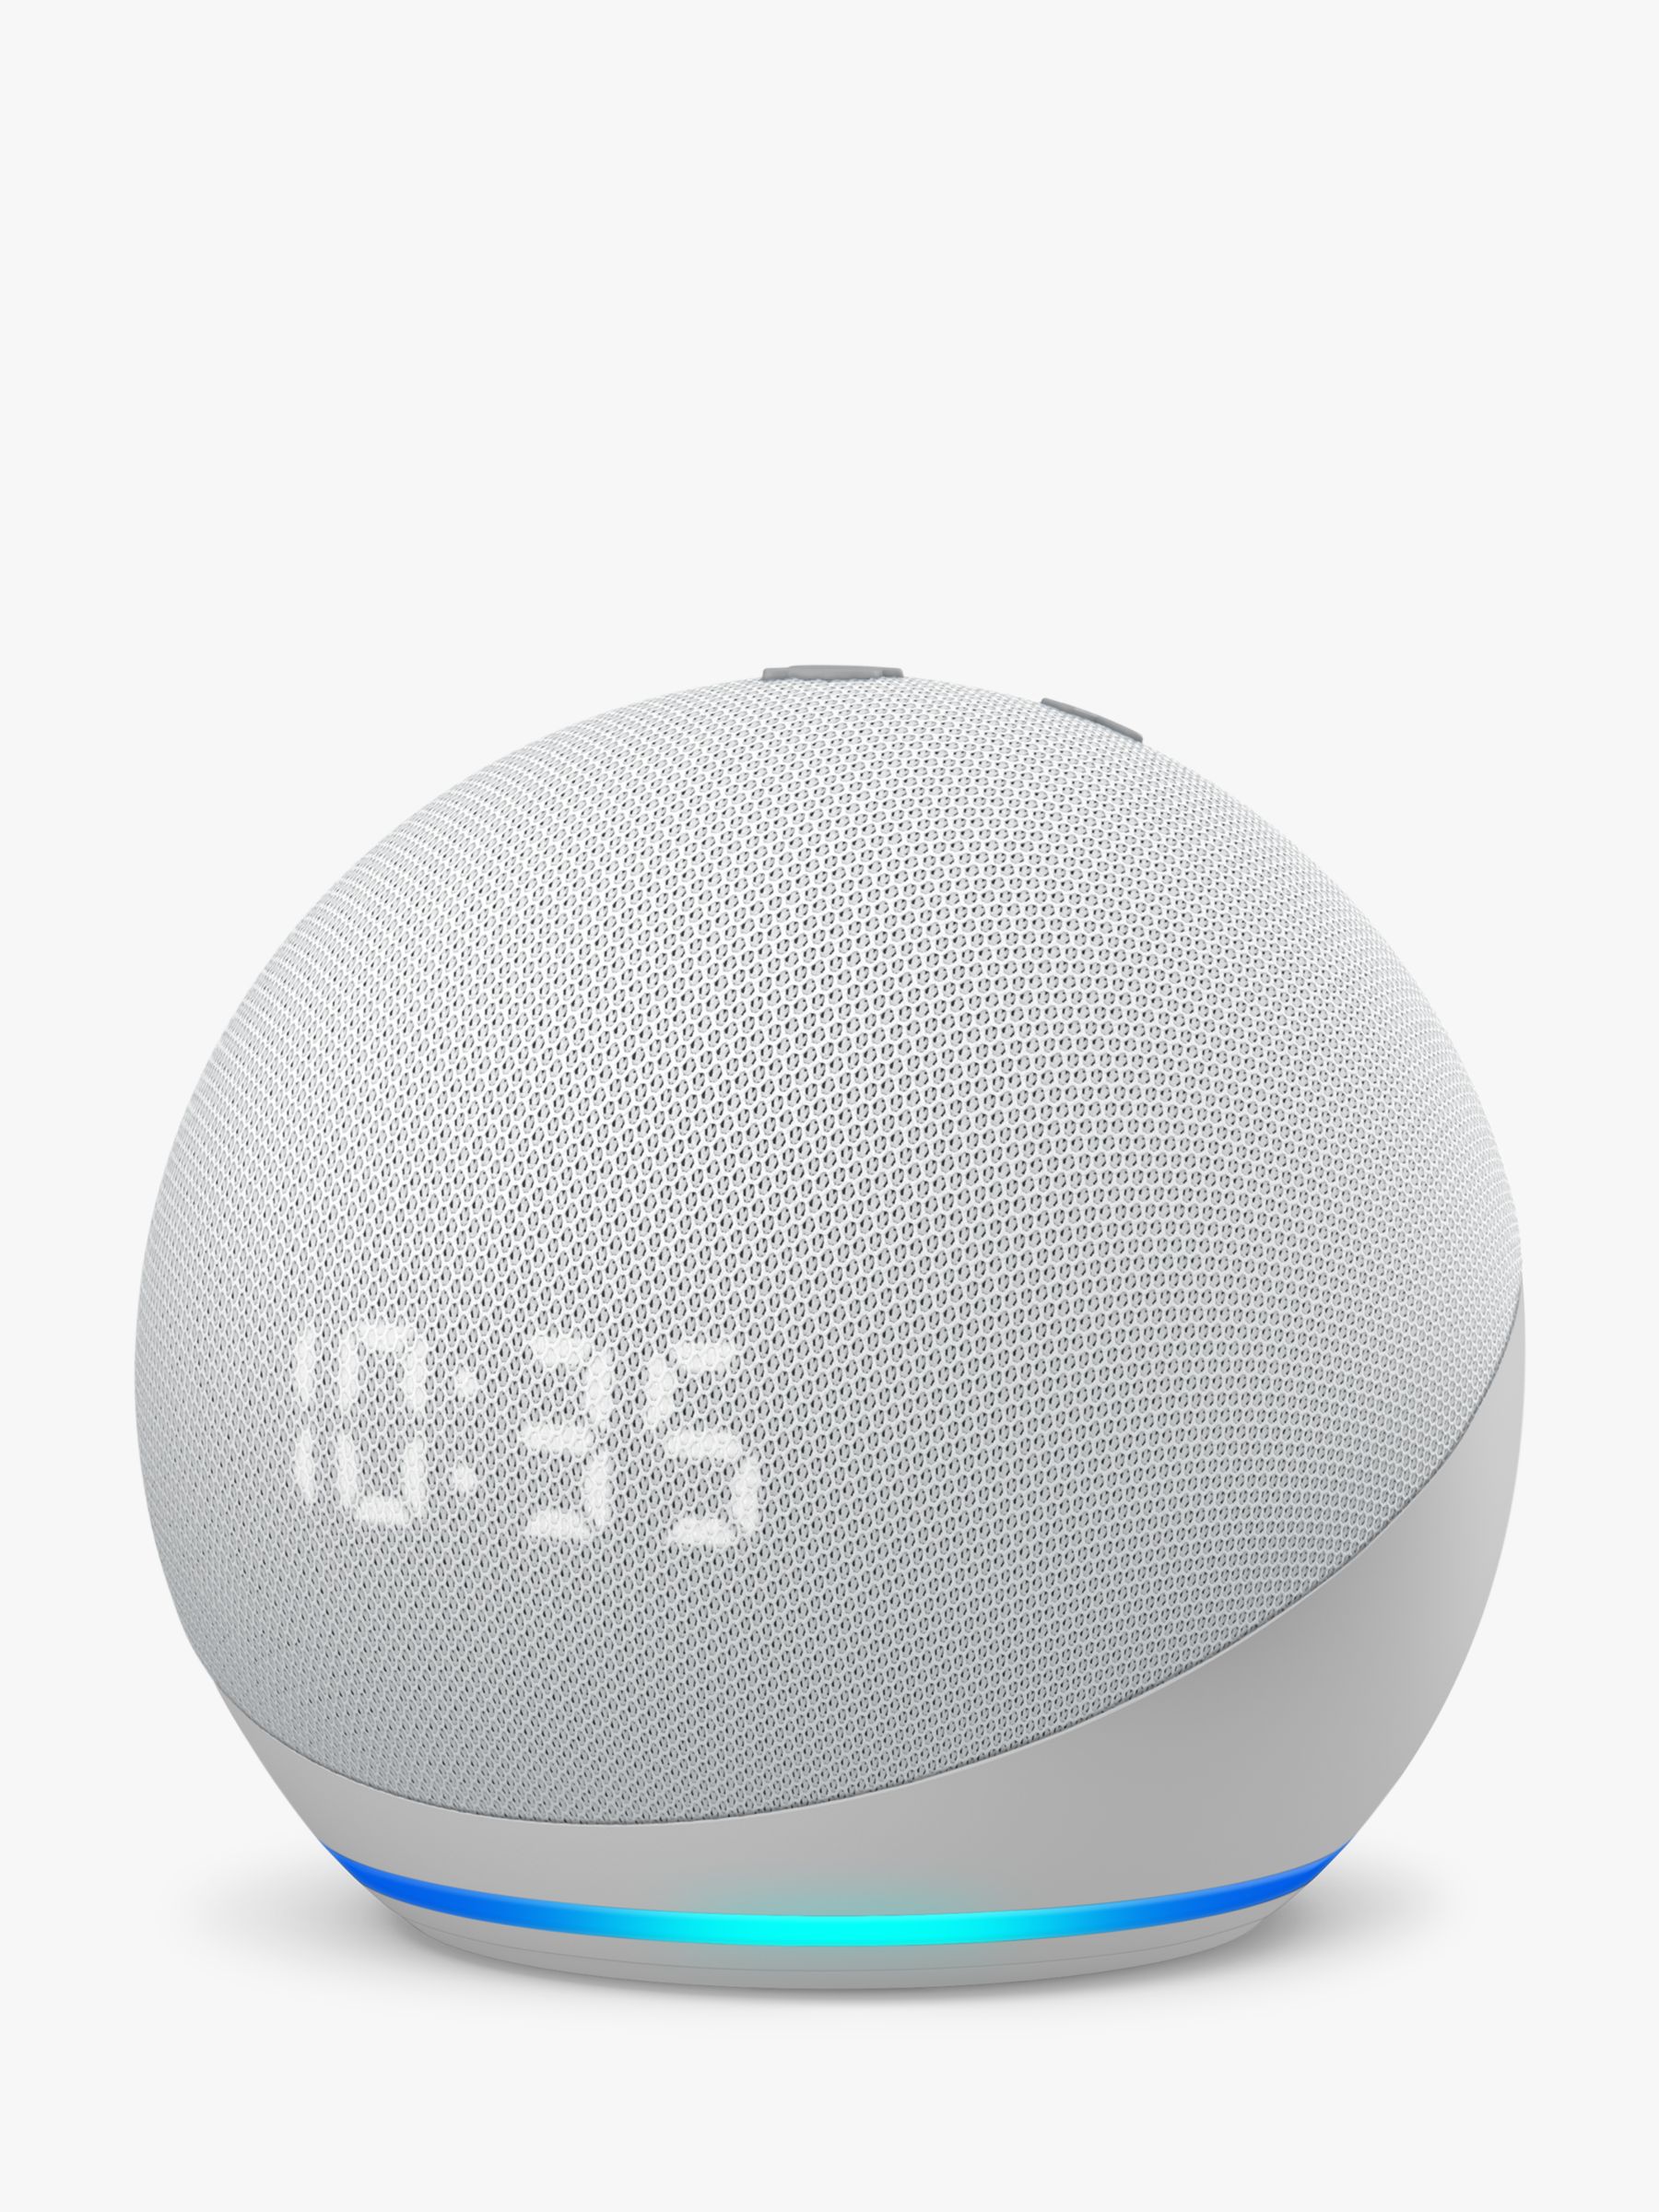 Amazon Echo Dot Smart Speaker with Clock and Alexa Voice Recognition & Control, 4th Generation, Glacier White